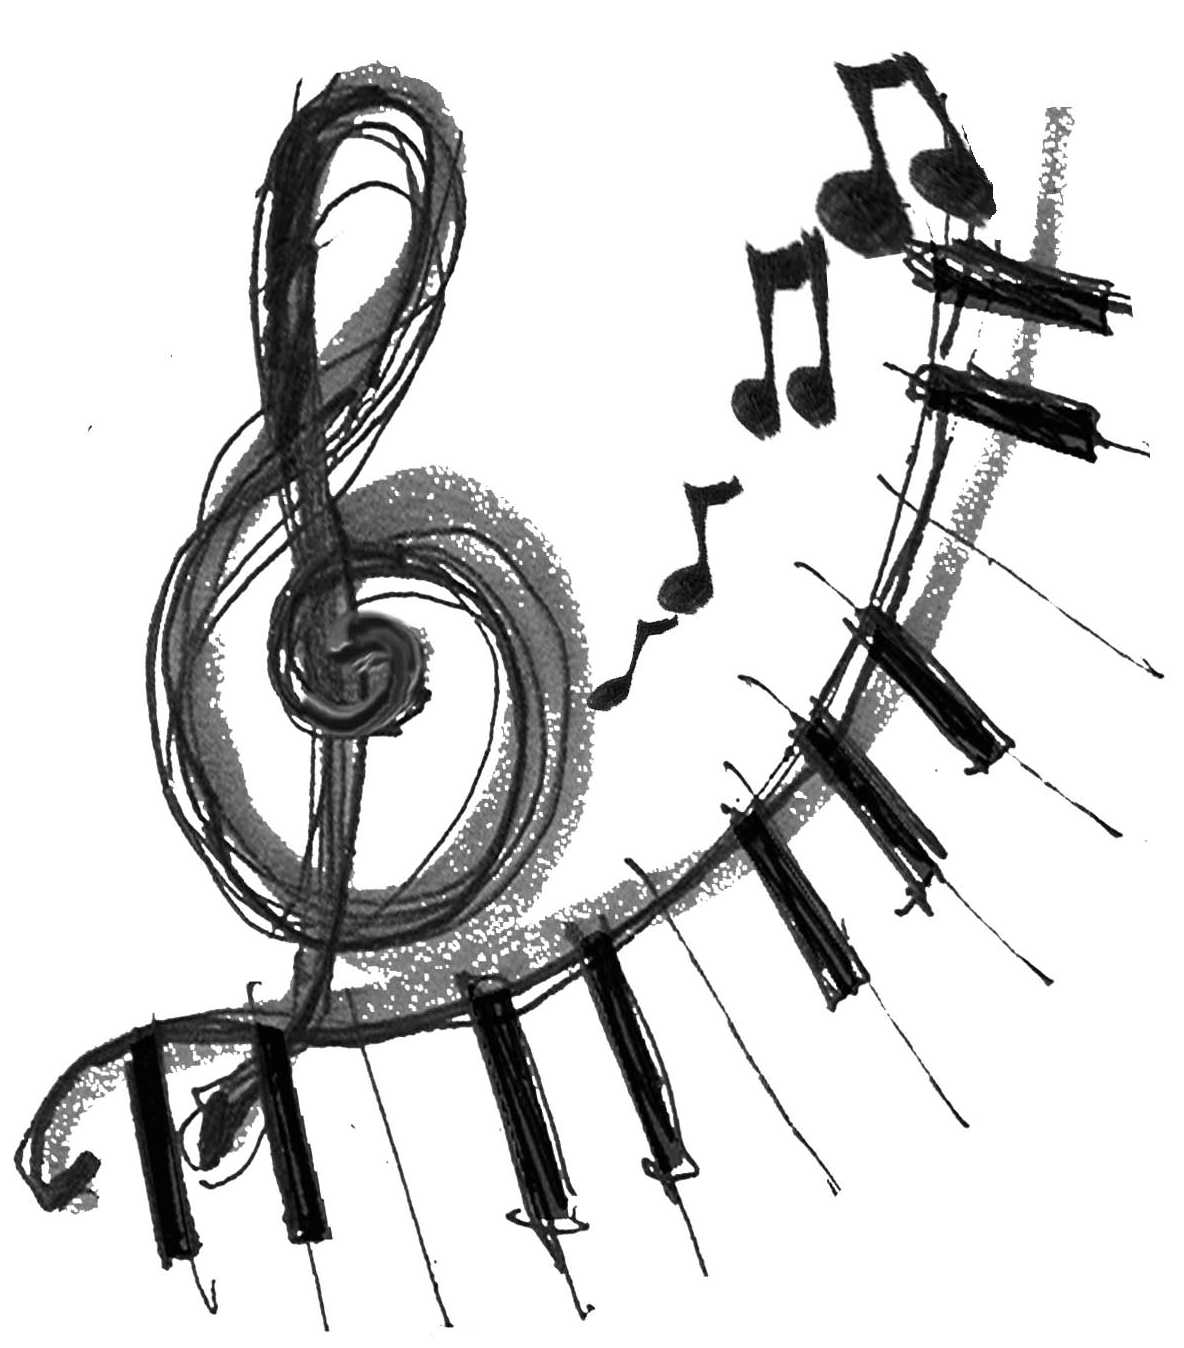 संगीत व नृत्य का महाकुम्भ – 51वाँ महाराणा कुम्भा संगीत समारोह